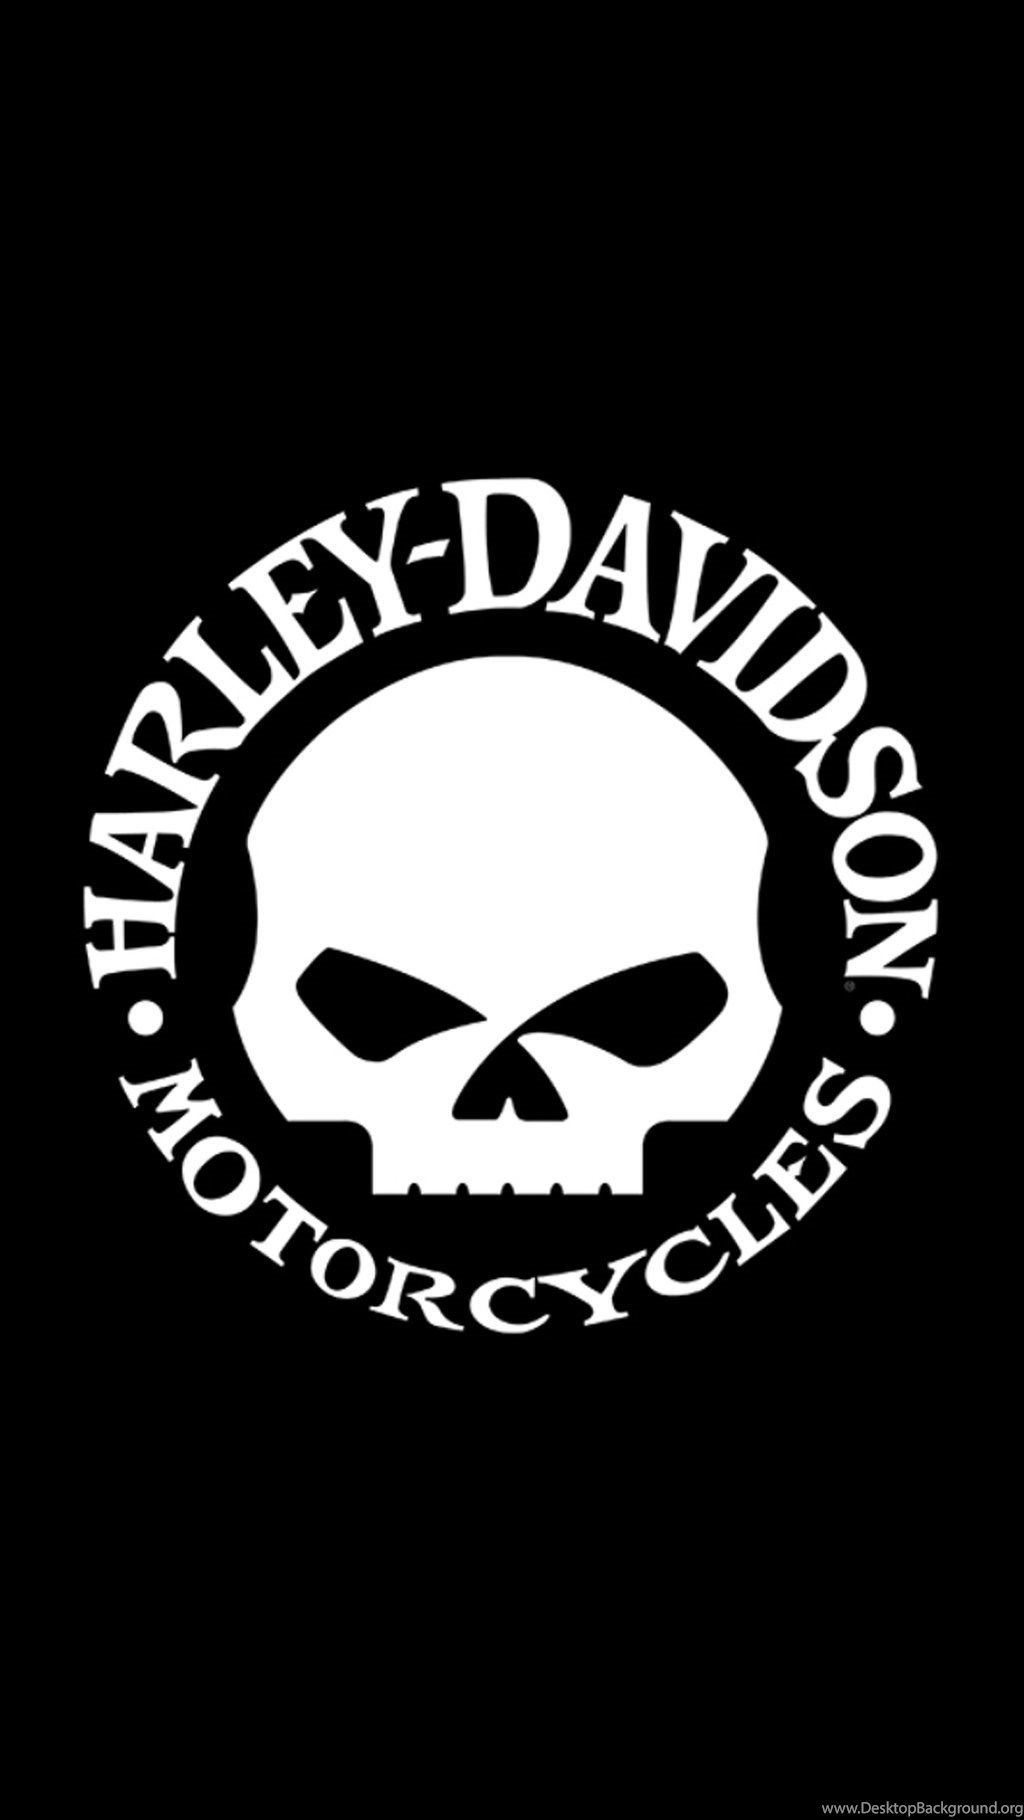 Harley Davidson iPhone Wallpaper Top